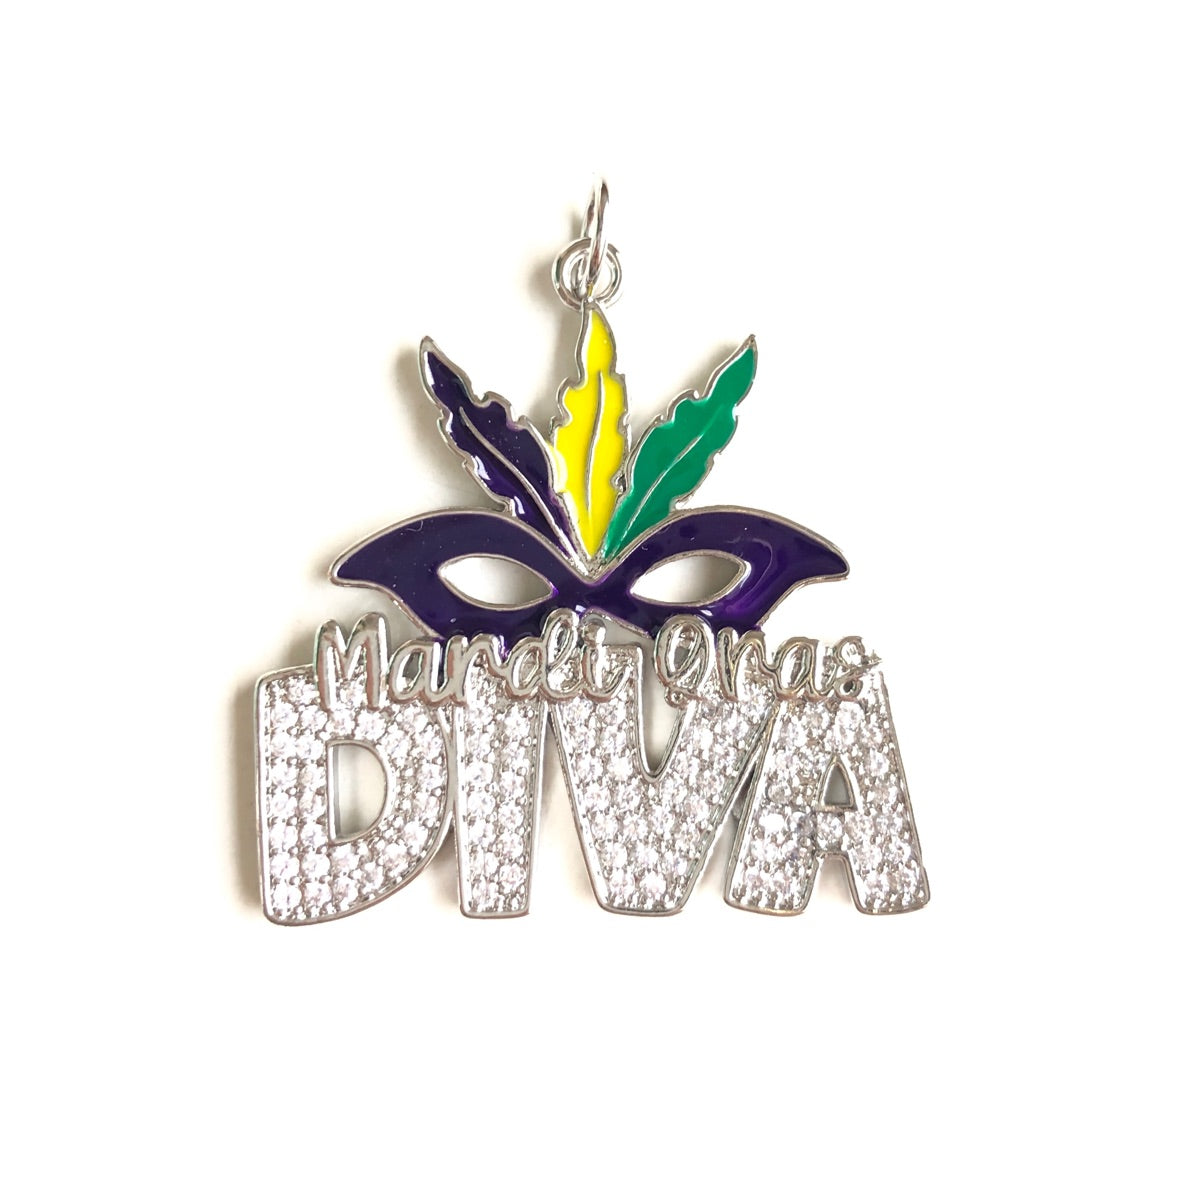 10pcs/lot CZ Paved Mardi Gras Diva Word Charm Pendants | Charms | Charms Beads Beyond Silver